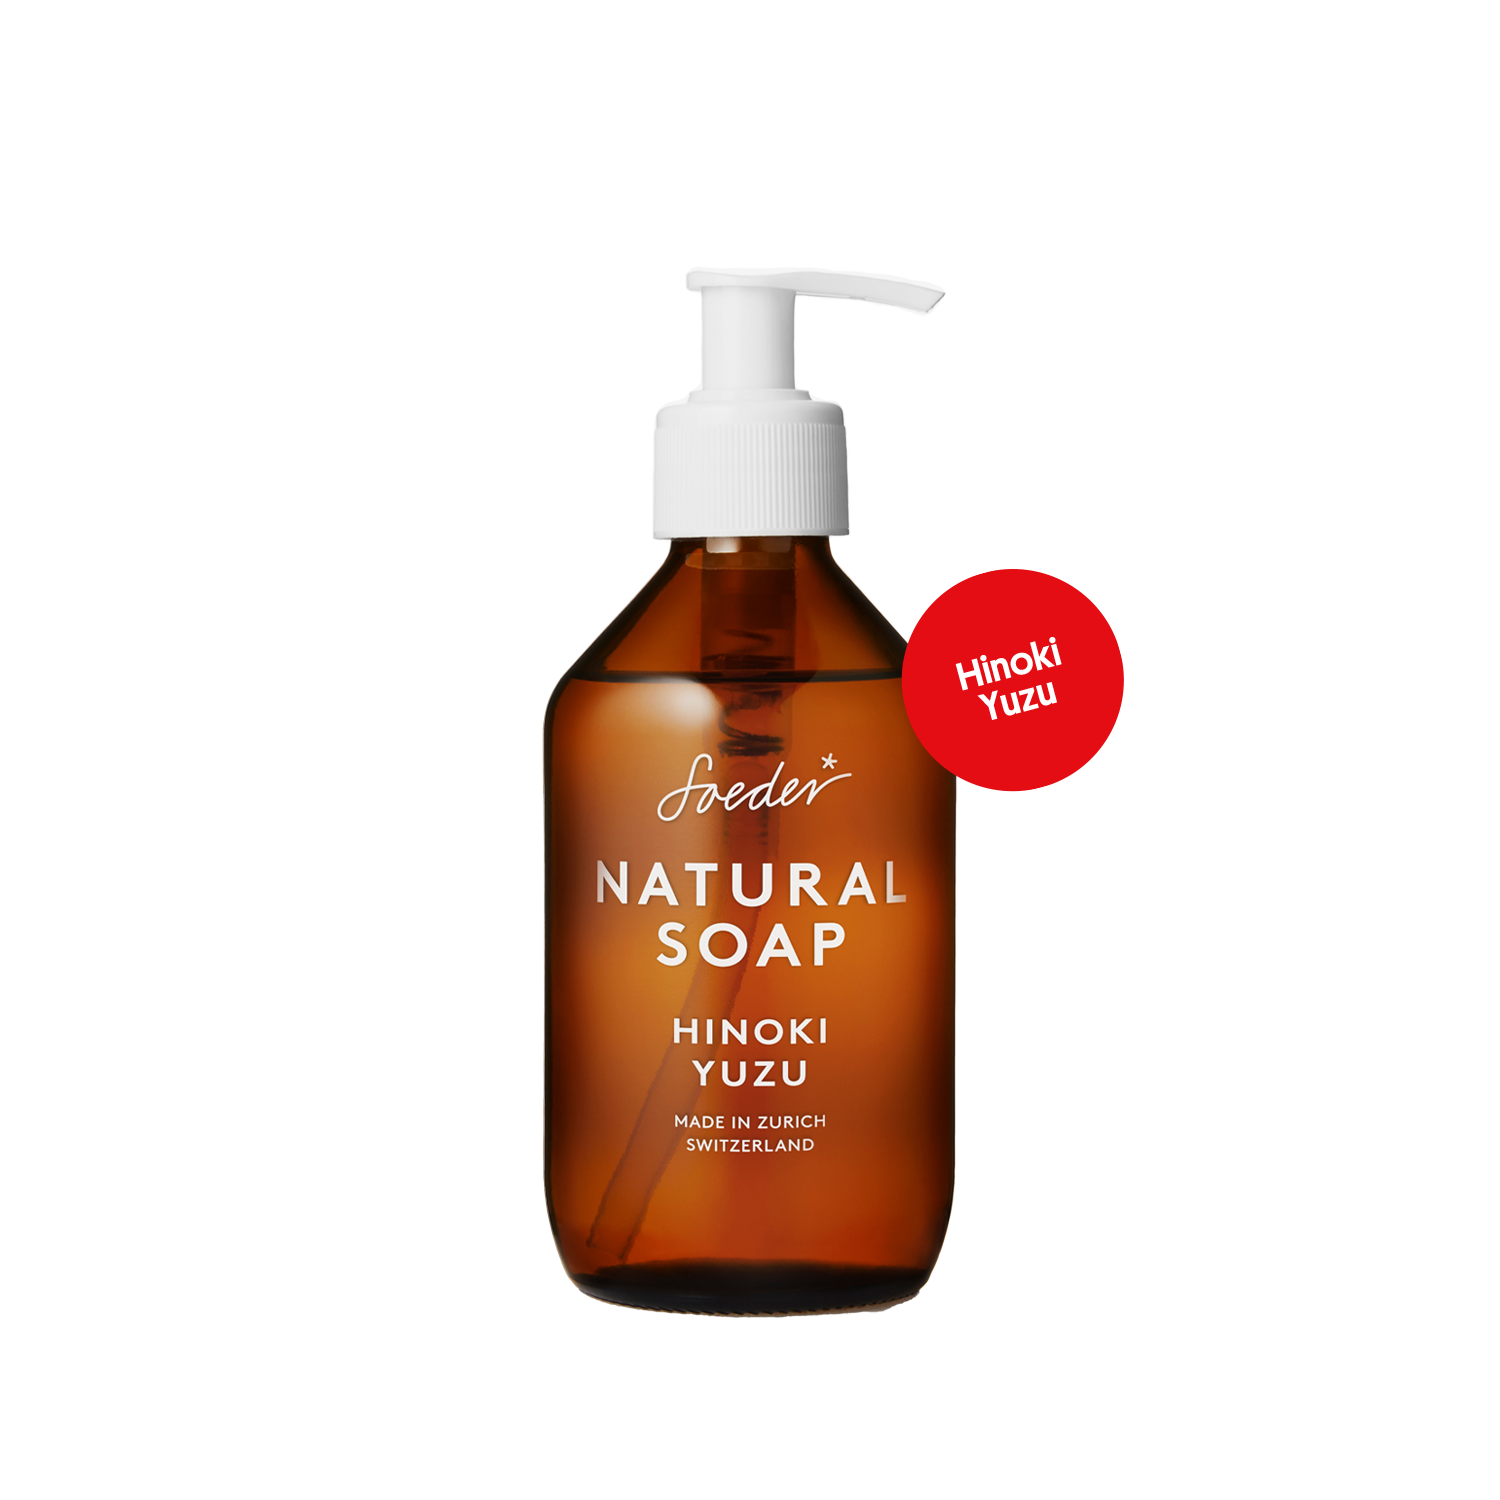 Natural Soap - Hinoki Yuzo 250 ml von soeder*